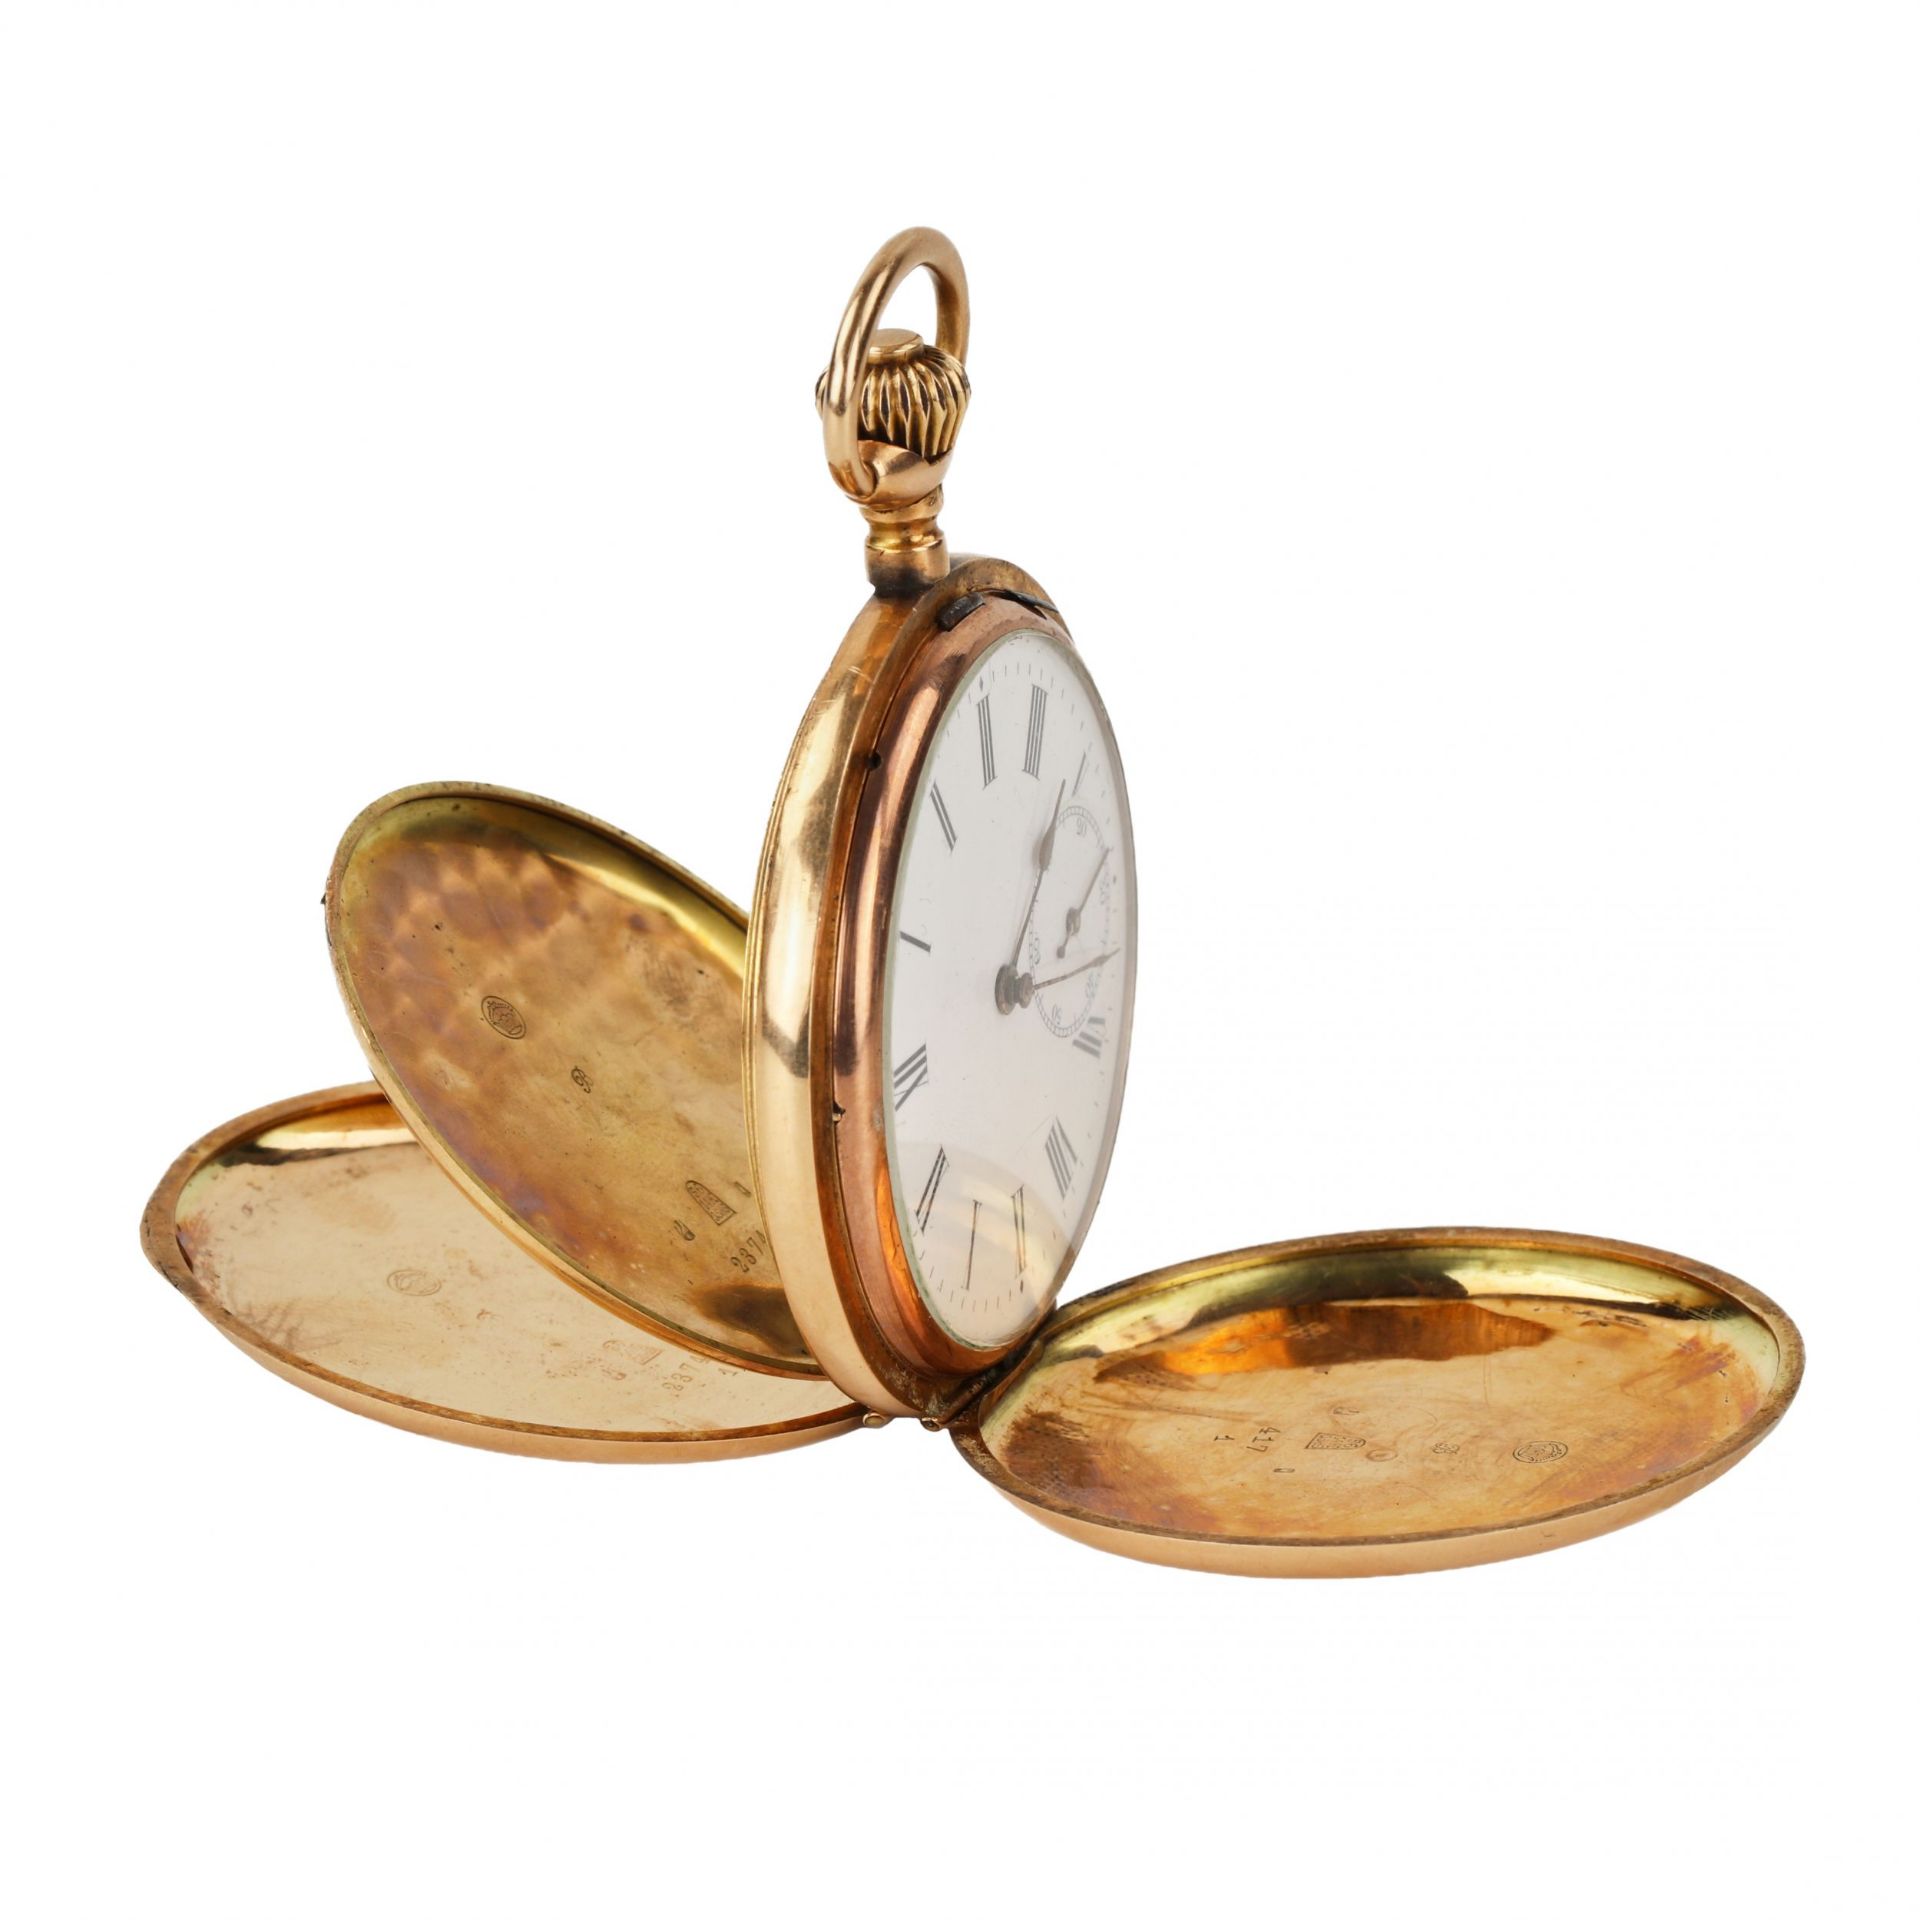 Moulinet gold pocket watch. - Image 5 of 9